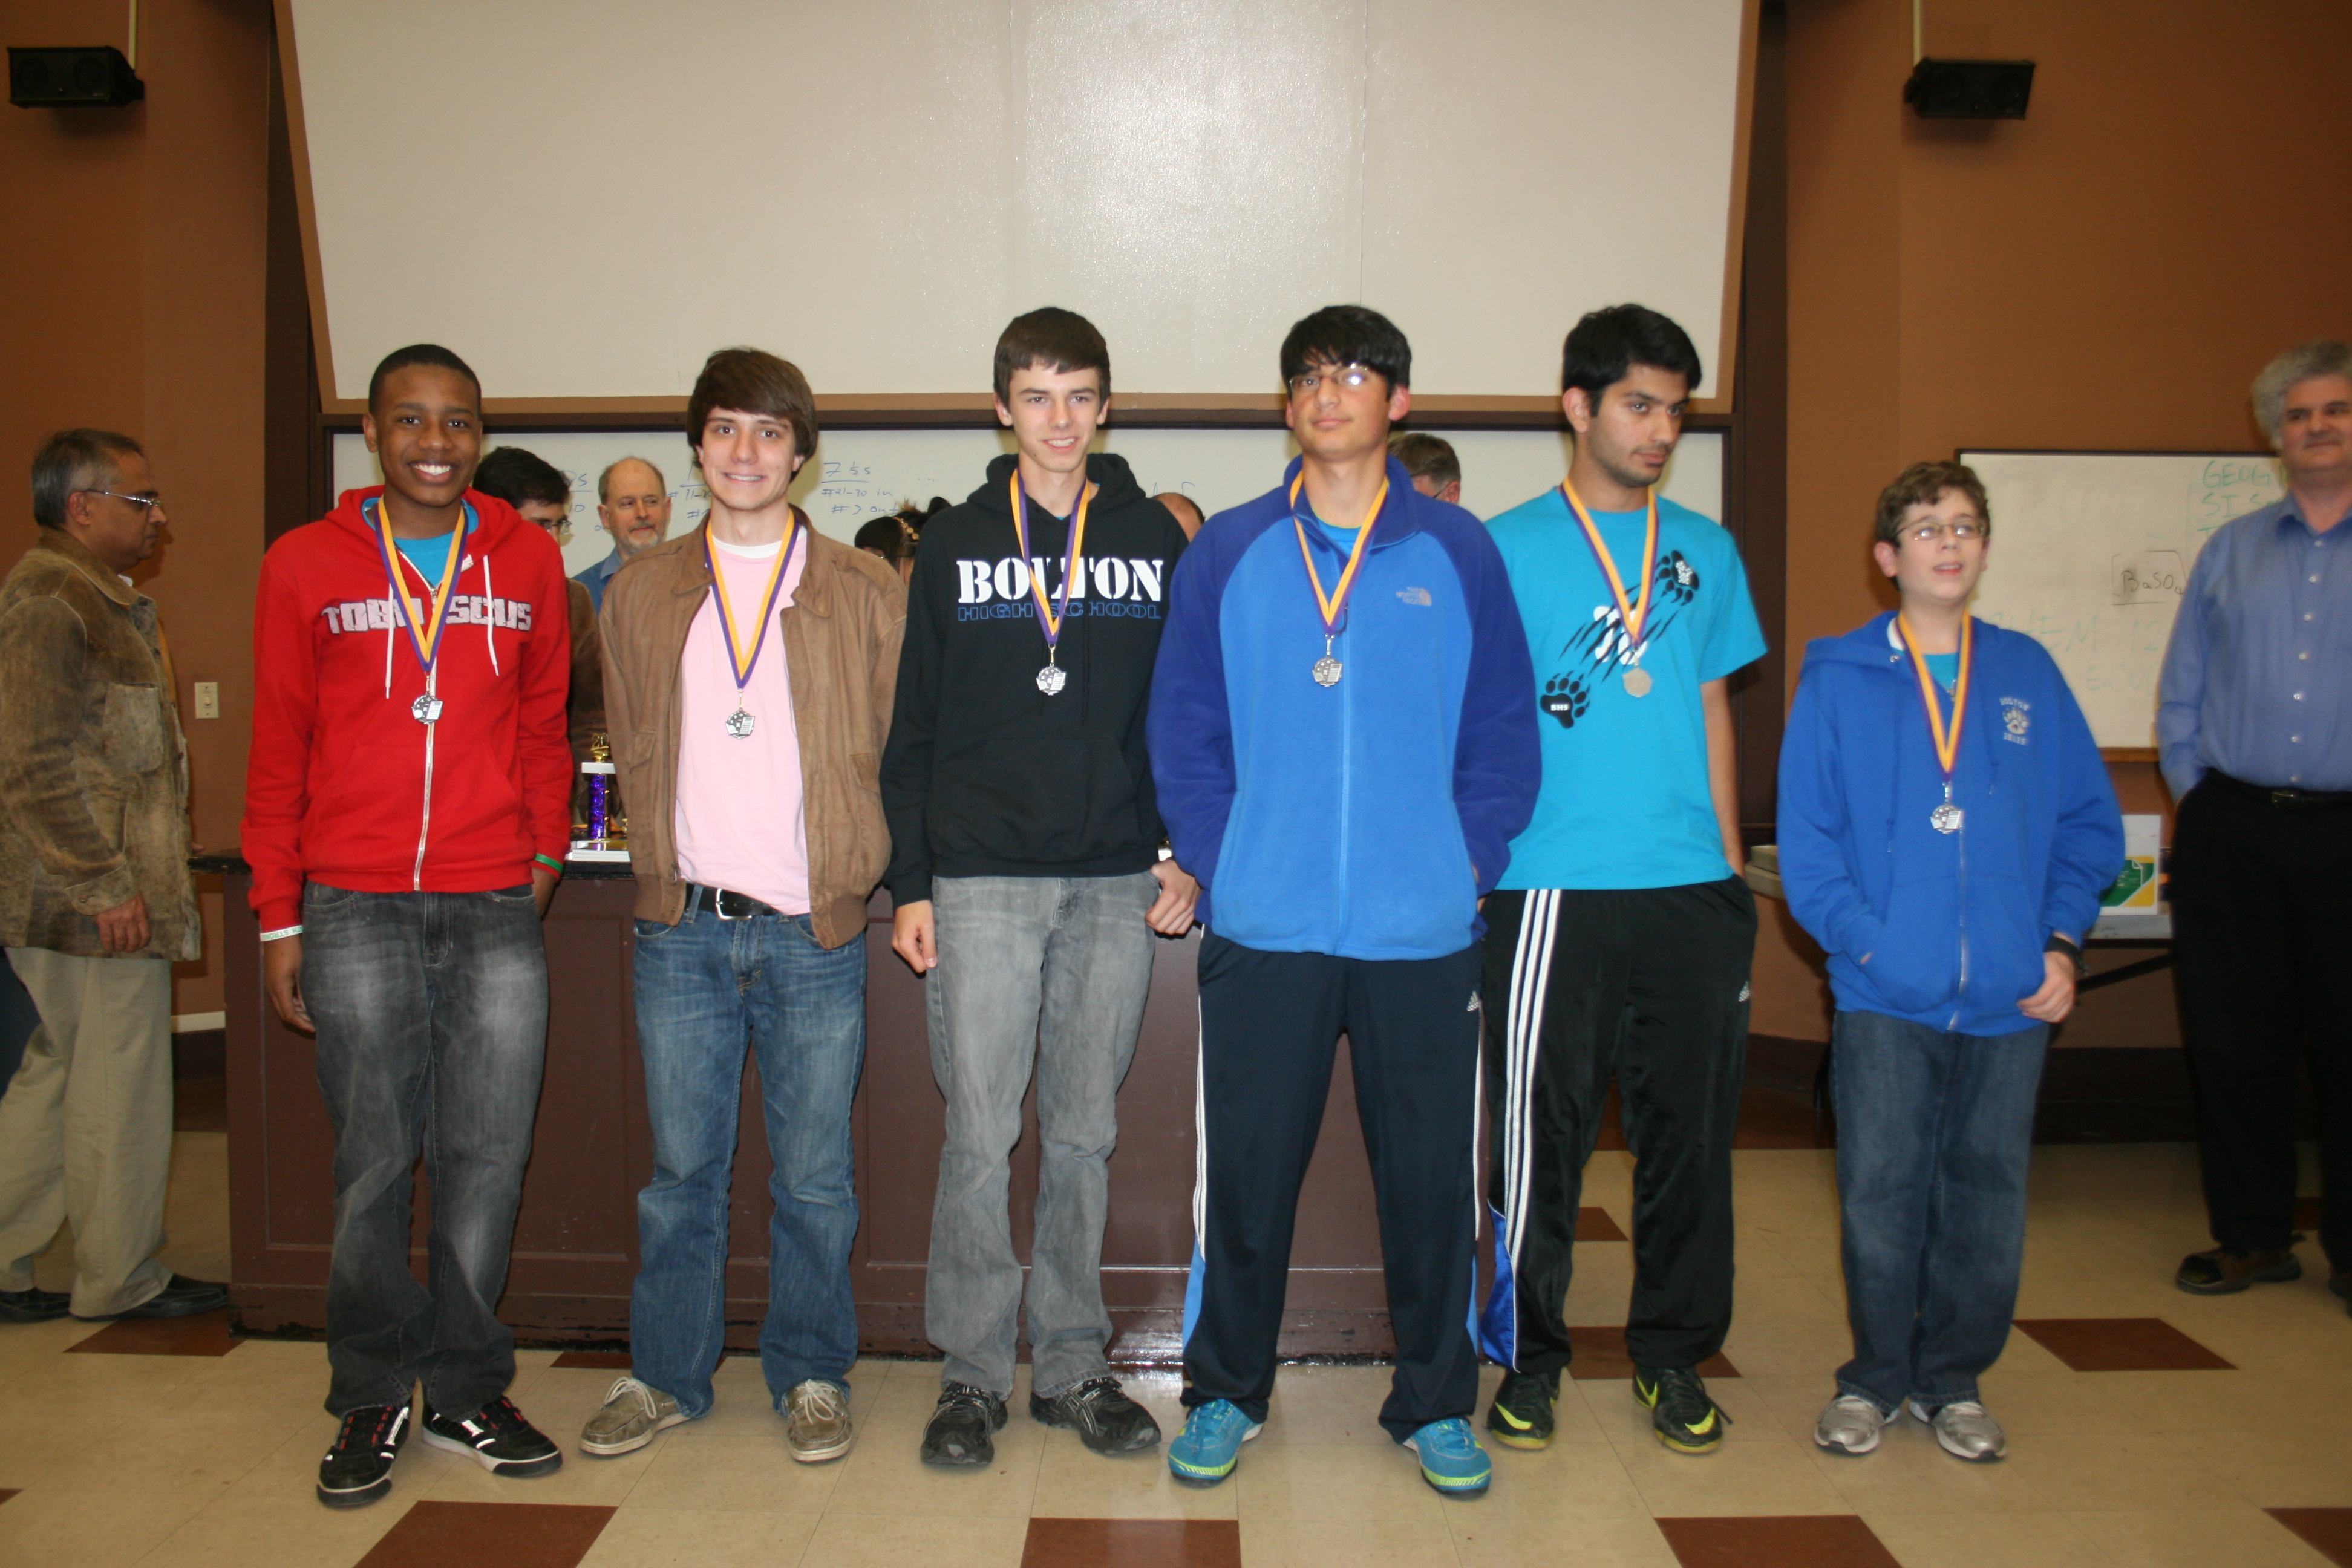 The Silver Medal Team:Bolton High School Team A